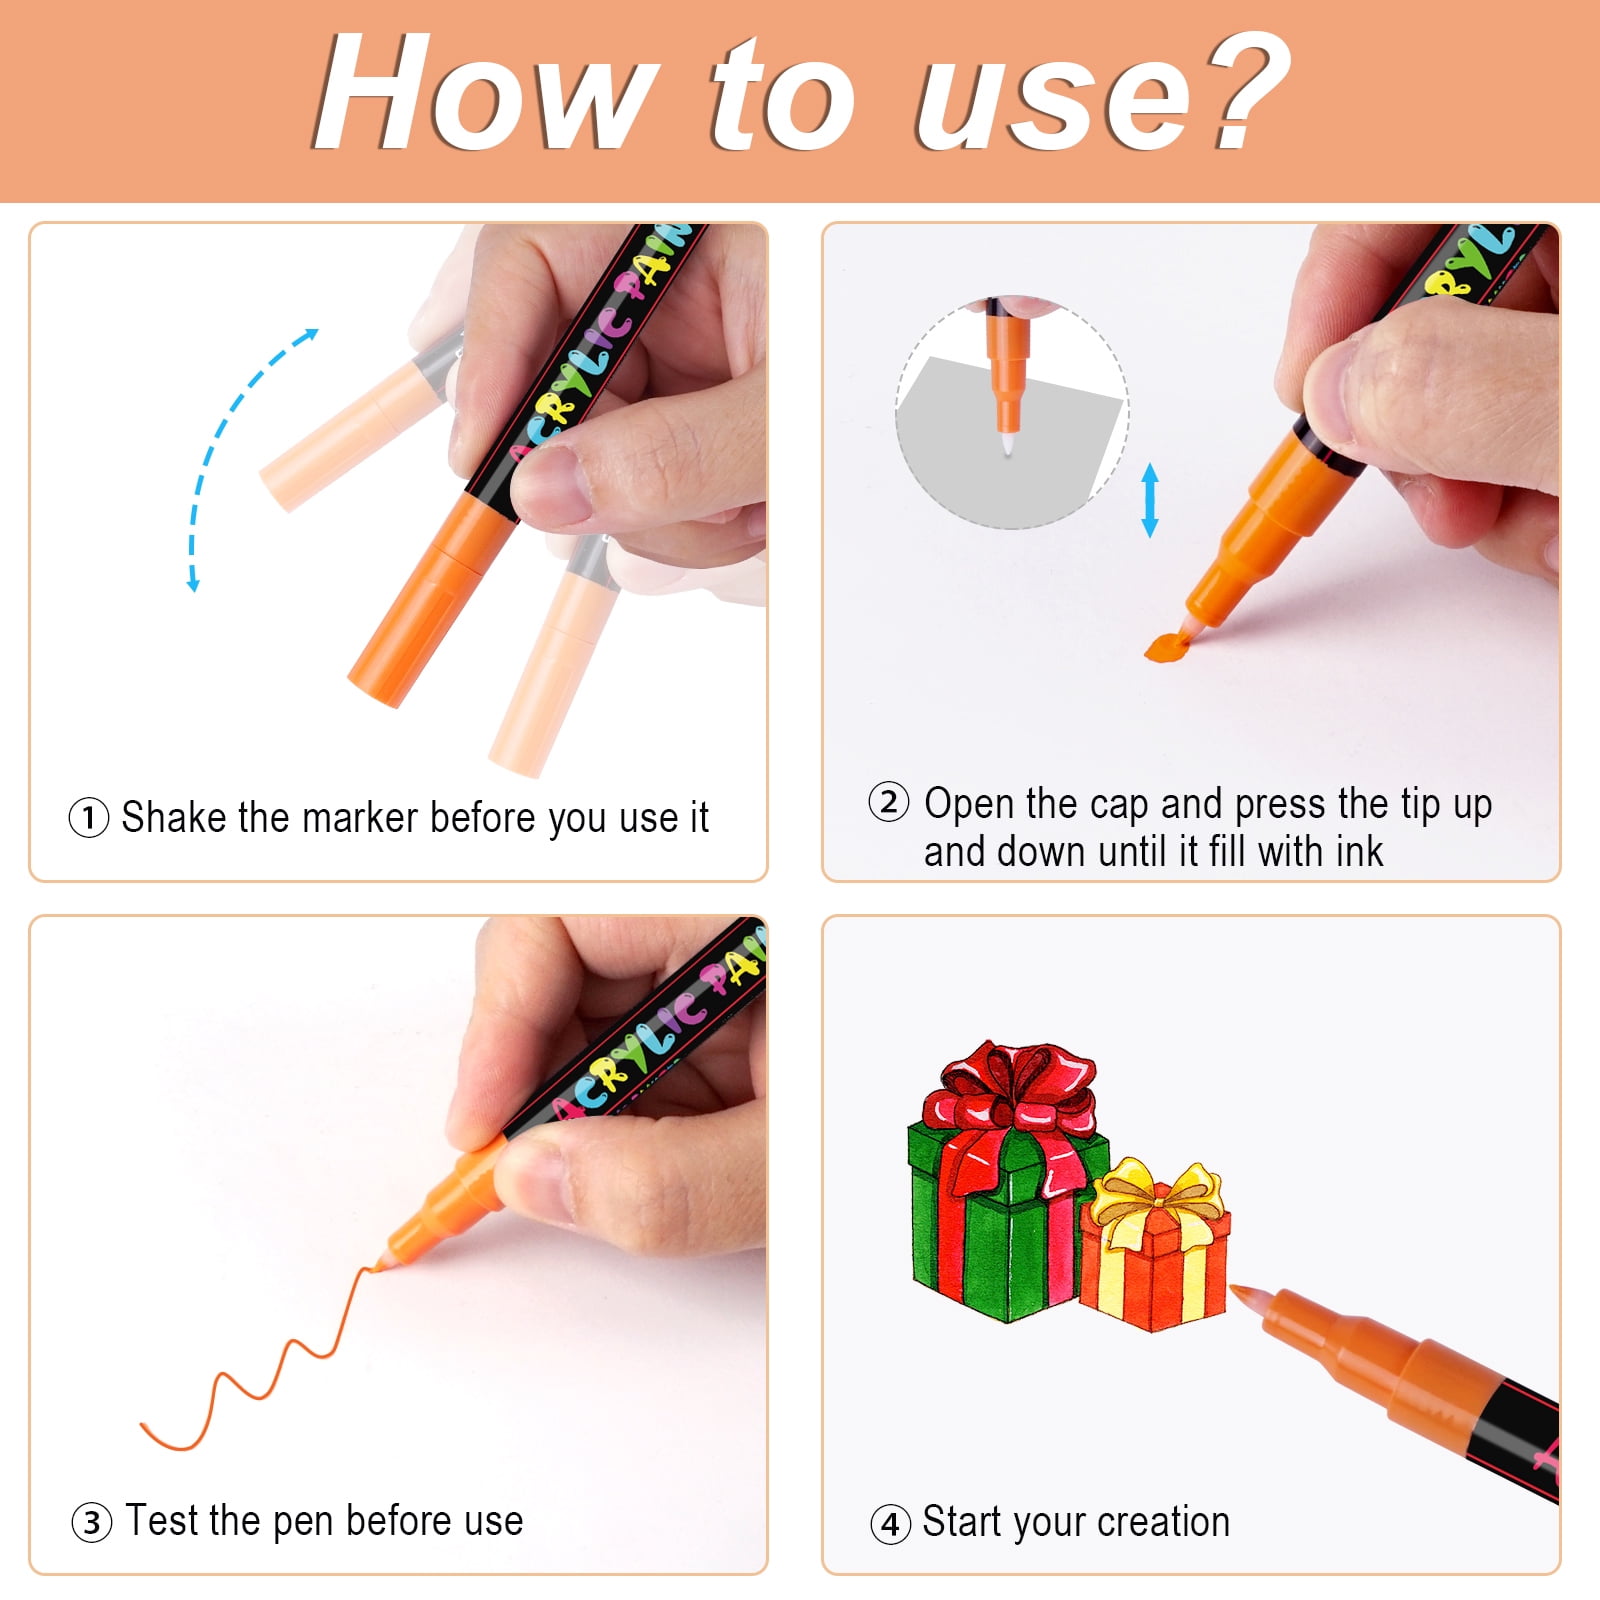 Pintar Premium Acrylic Paint Pens - (24-Pack) Fine Tip Pens for Rock Painting, C